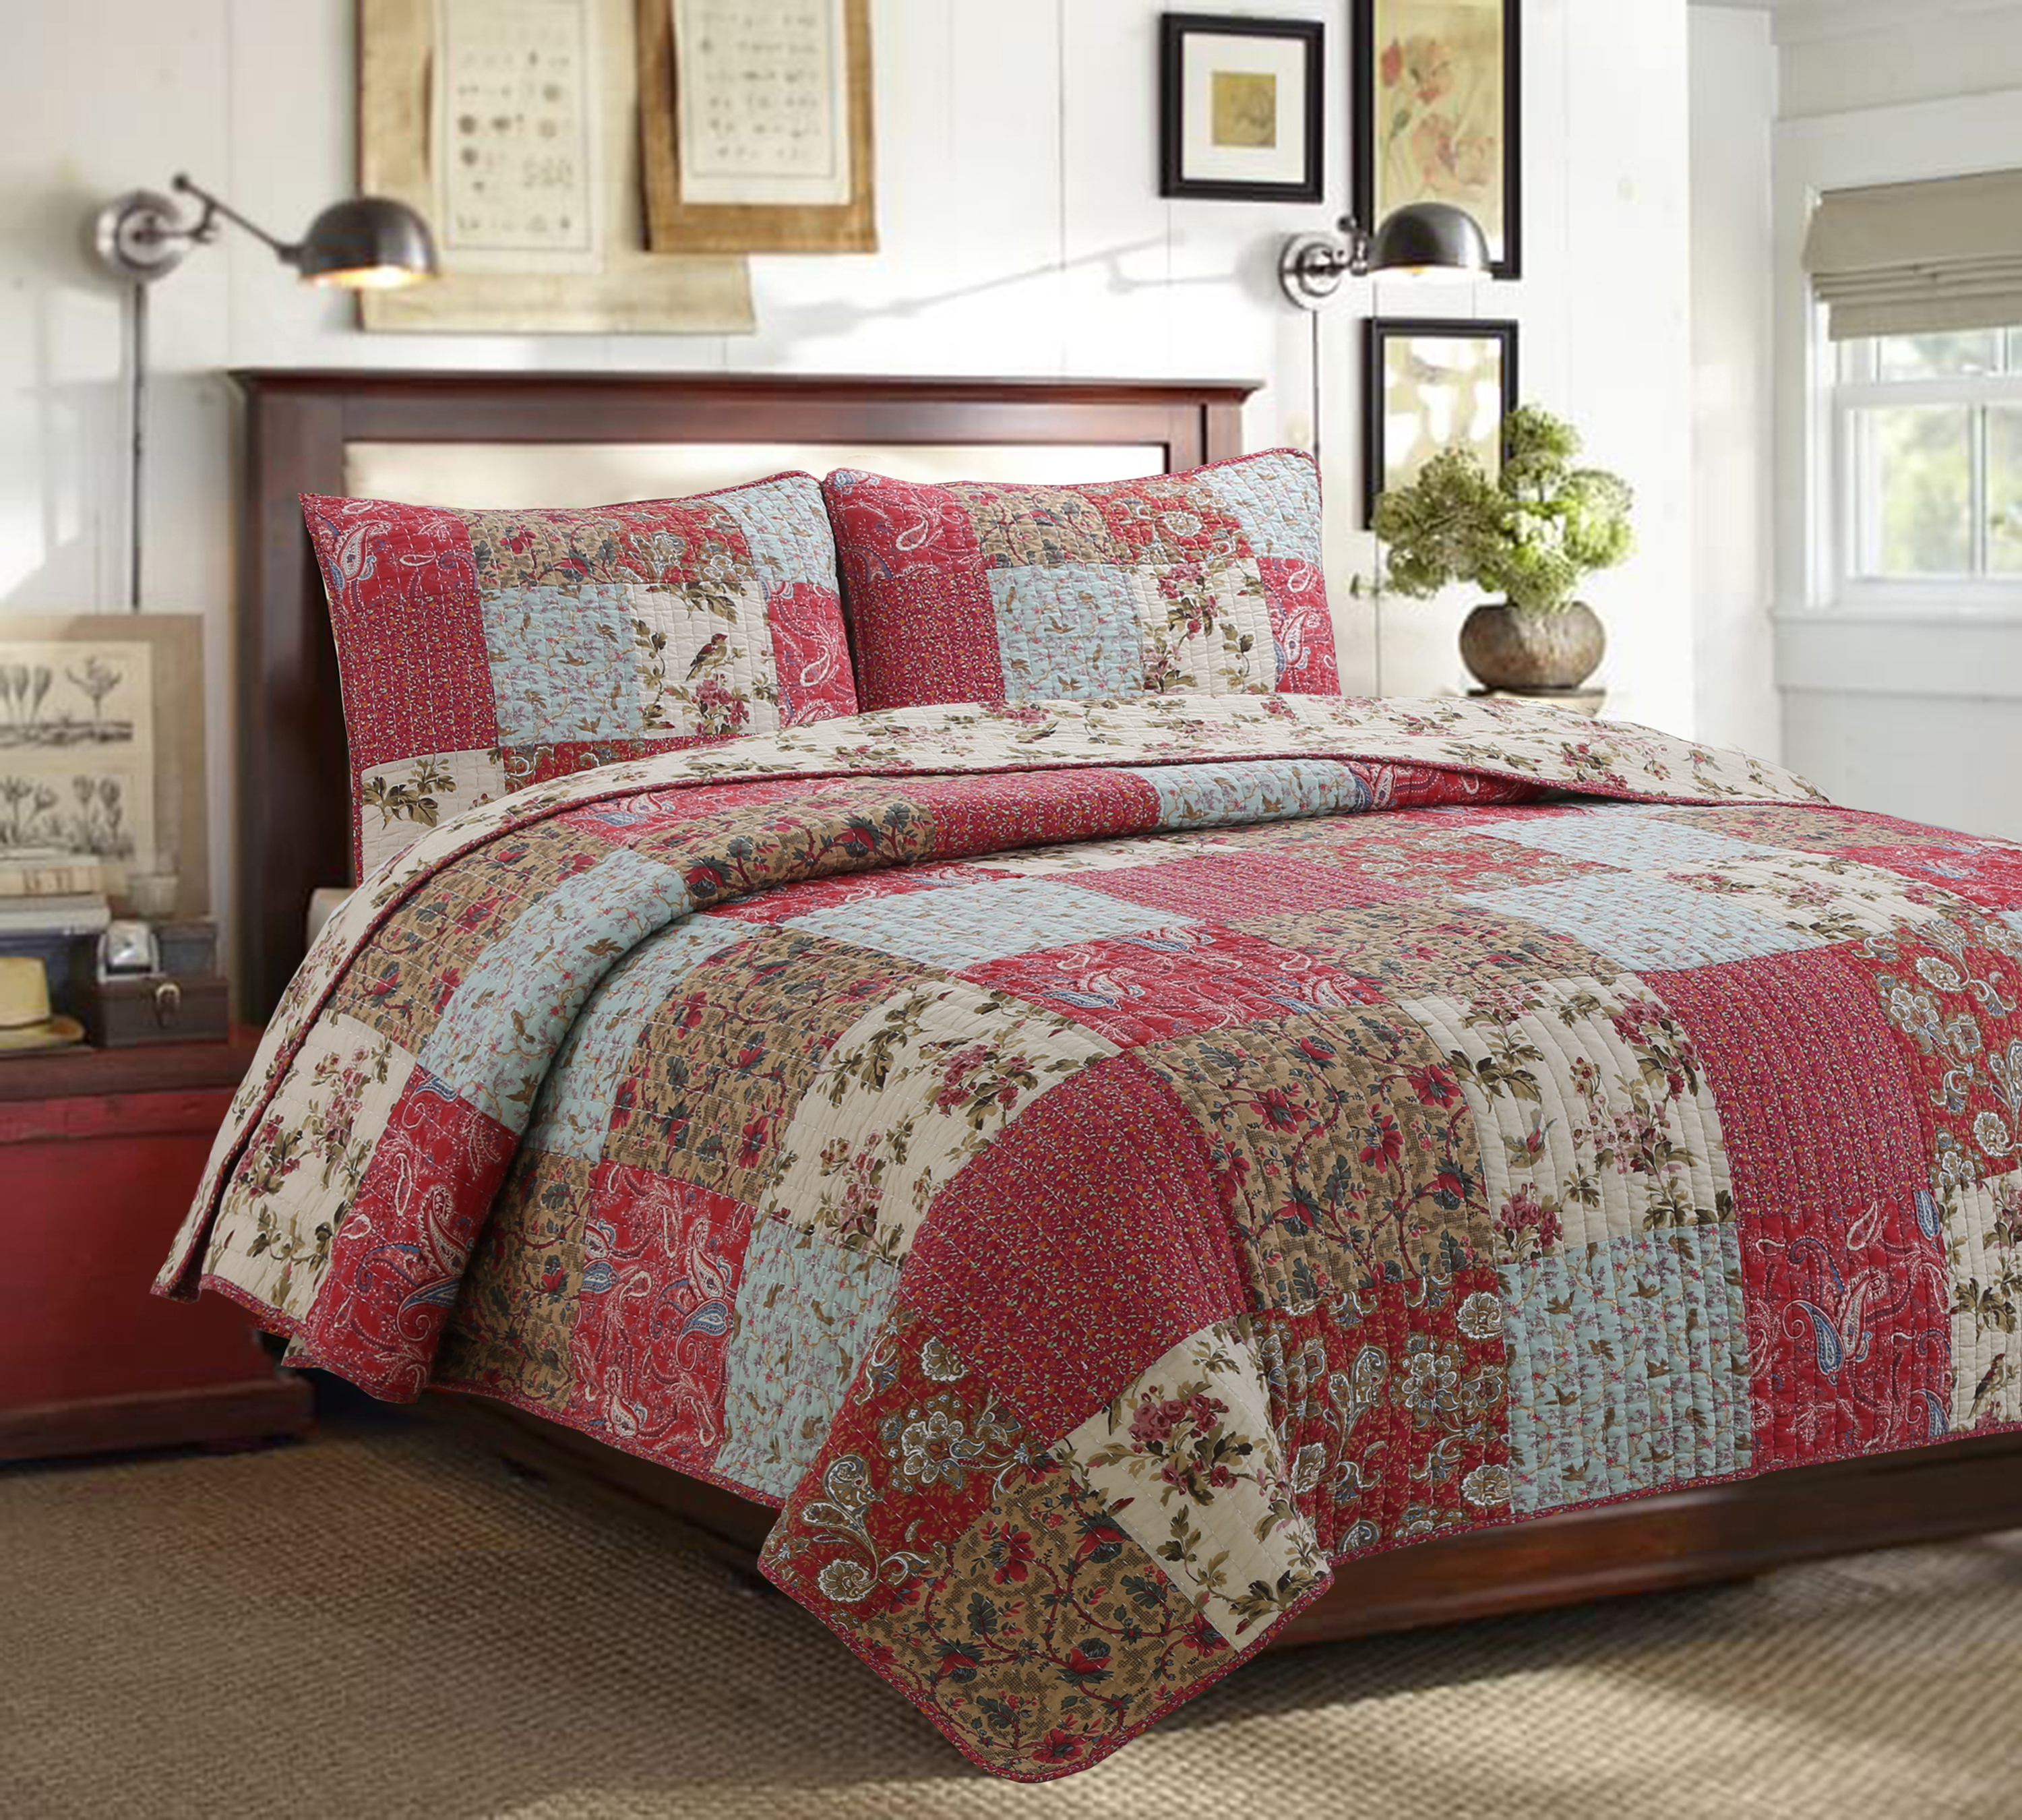 GEORGE & JIMMY Patchwork Quilt Set 3Pcs Reversible Multicolor Bedding Set Bedroom Quilt Bed 100% Cotton King Size